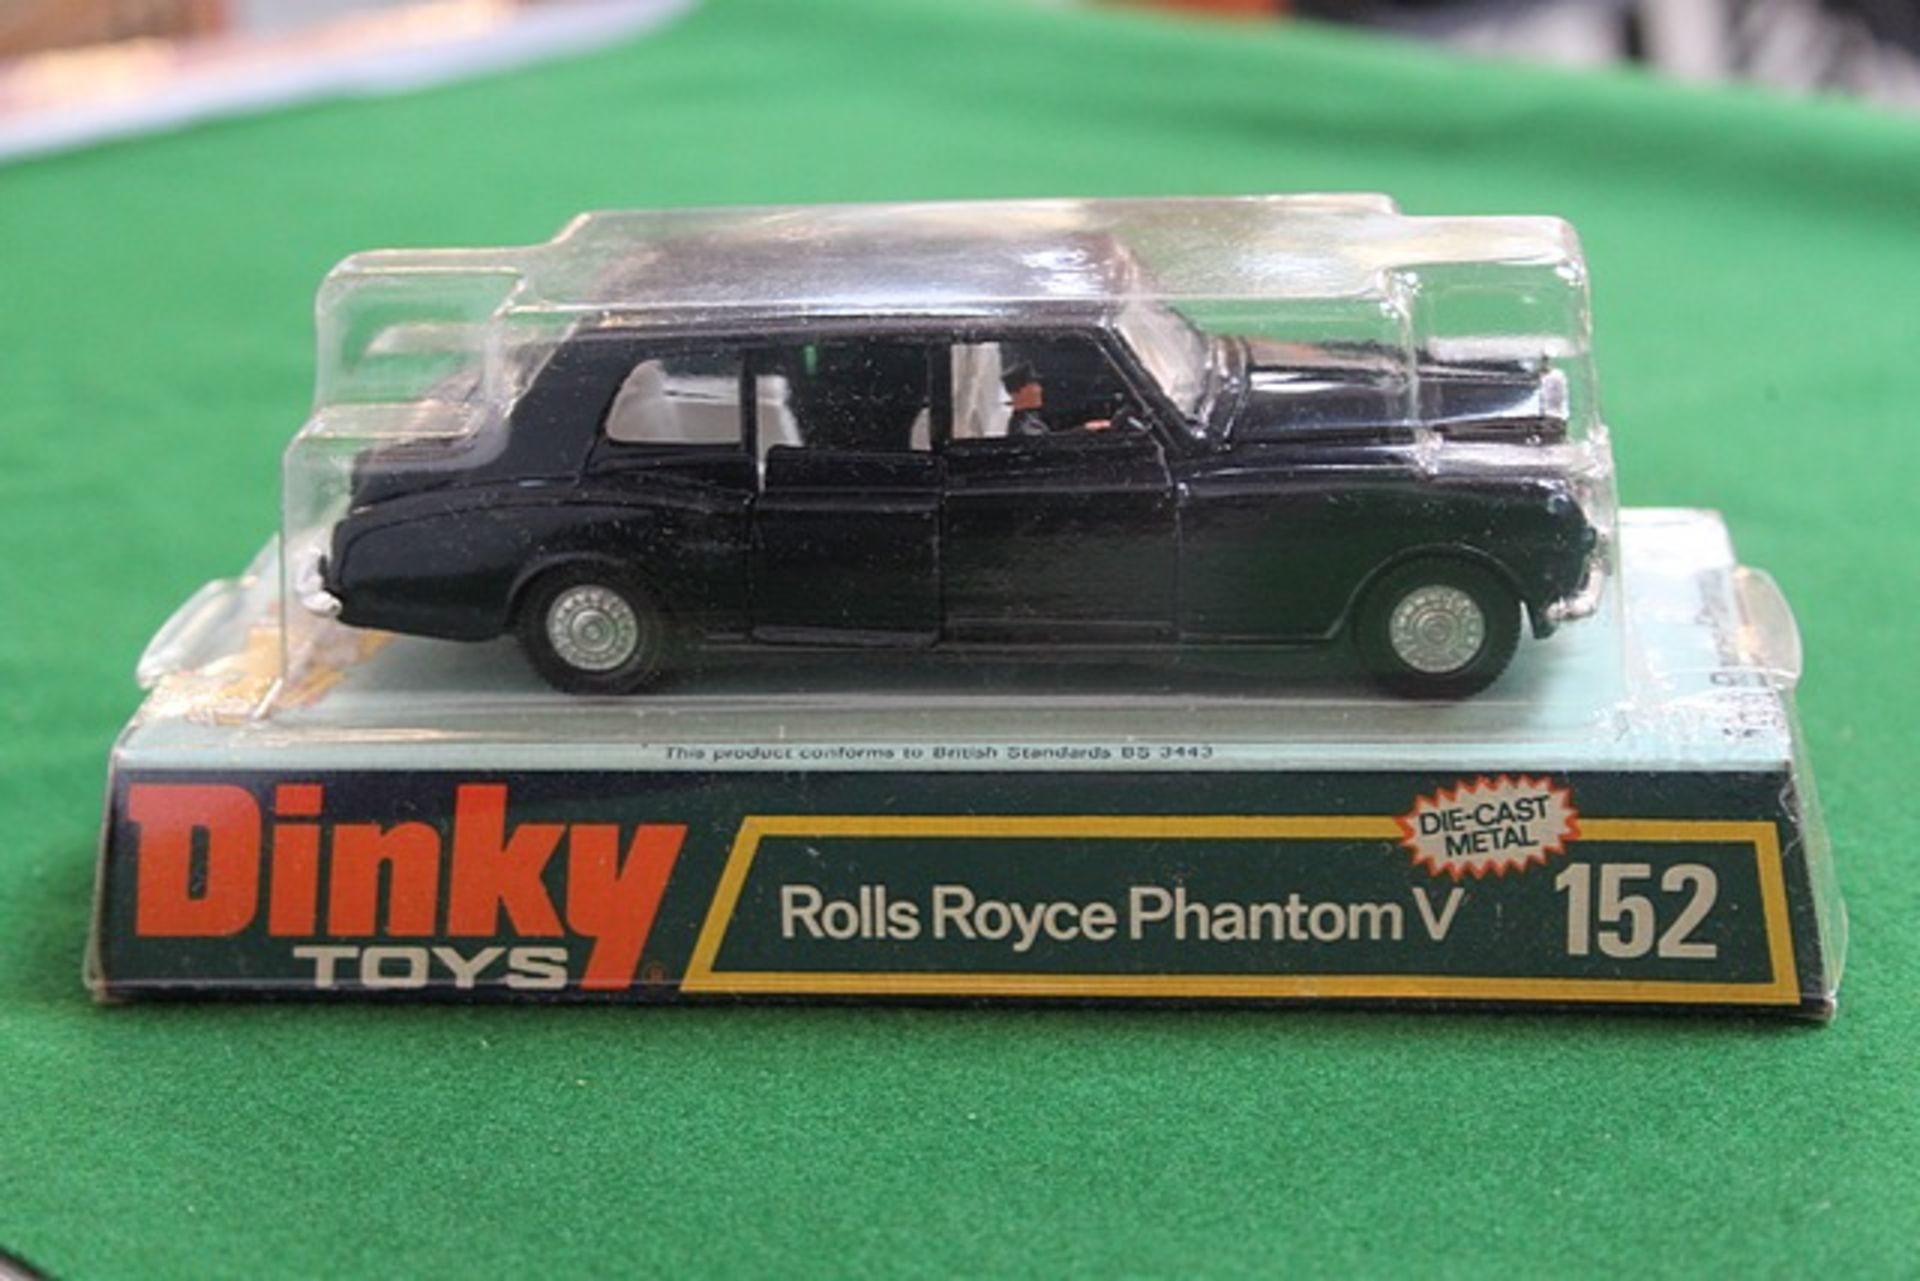 Dinky Toys Diecast #152 Rolls Royce Phantom V Complete In Original Packaging - Image 2 of 2